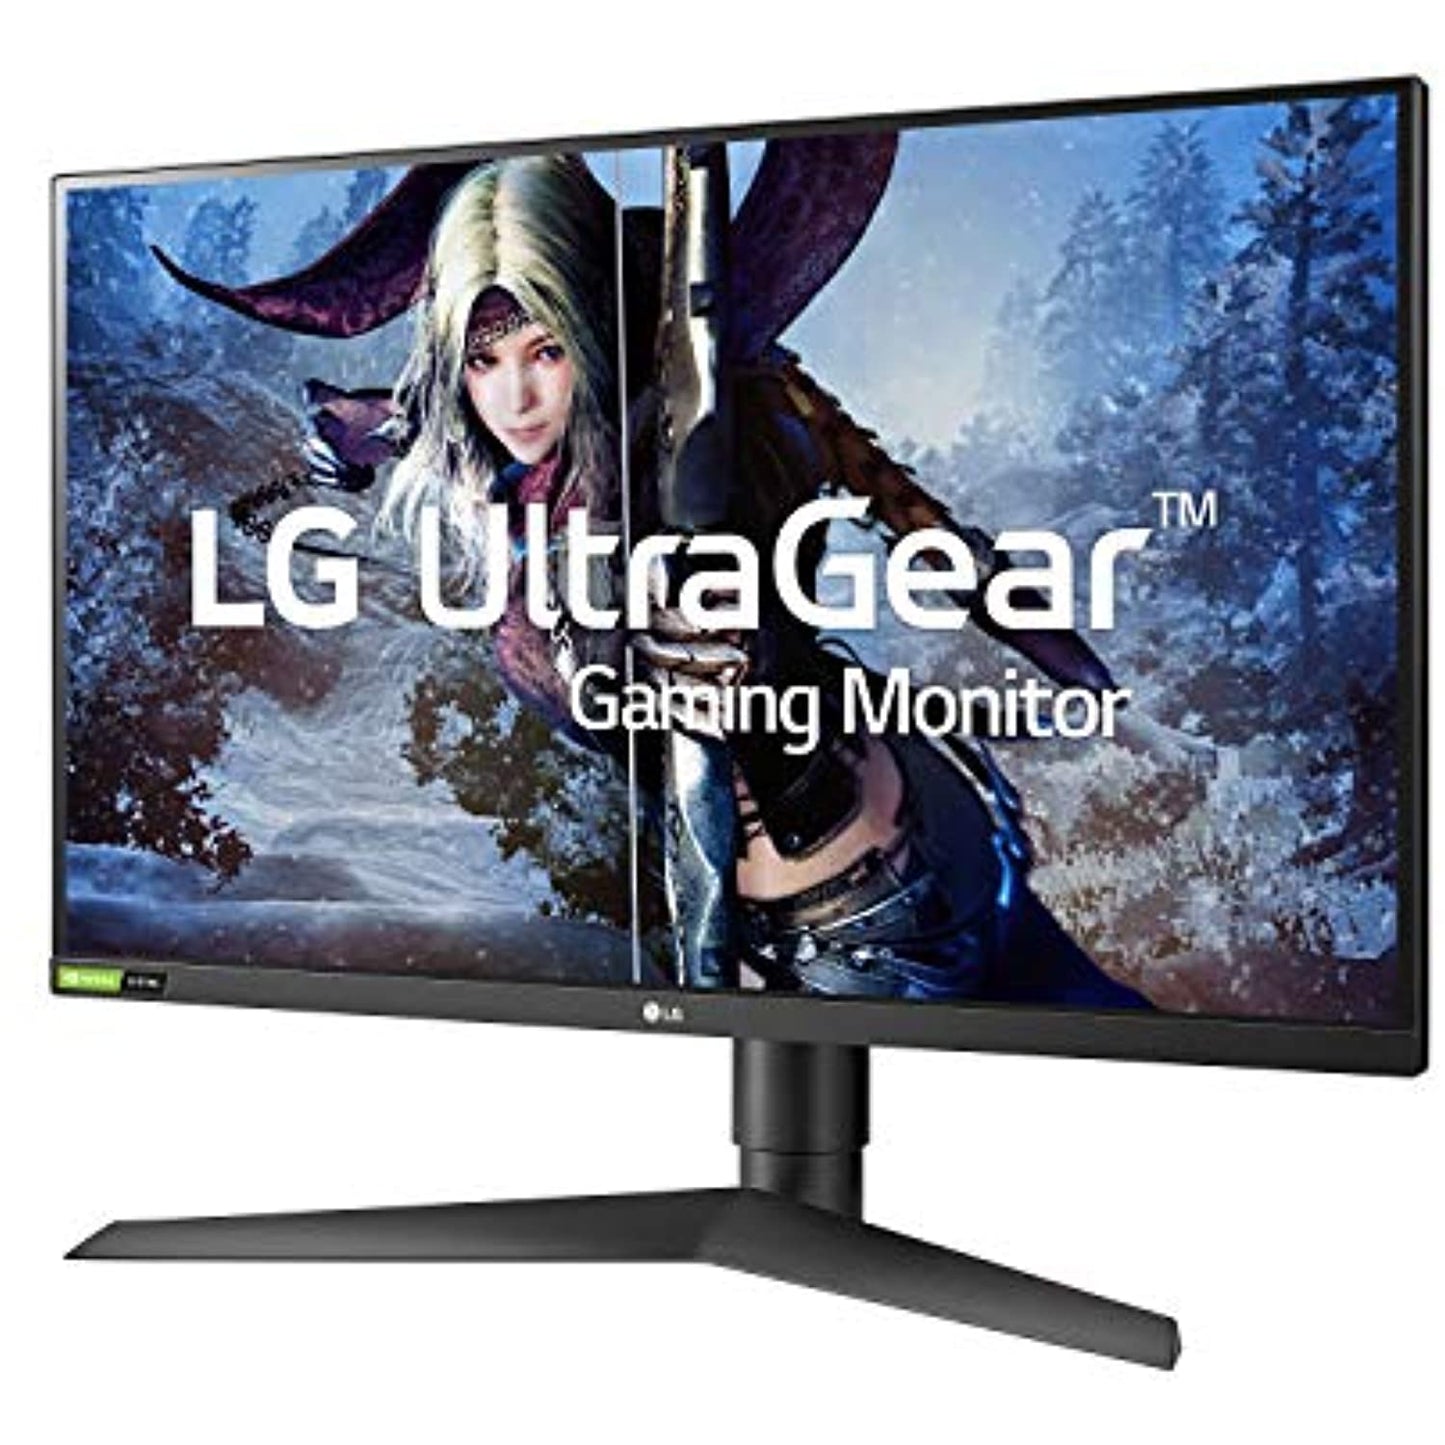 LG 27GL83A-B 27 Inch Ultra Gear Compatible Gaming Monitor Color Black - A Horizon Dawn